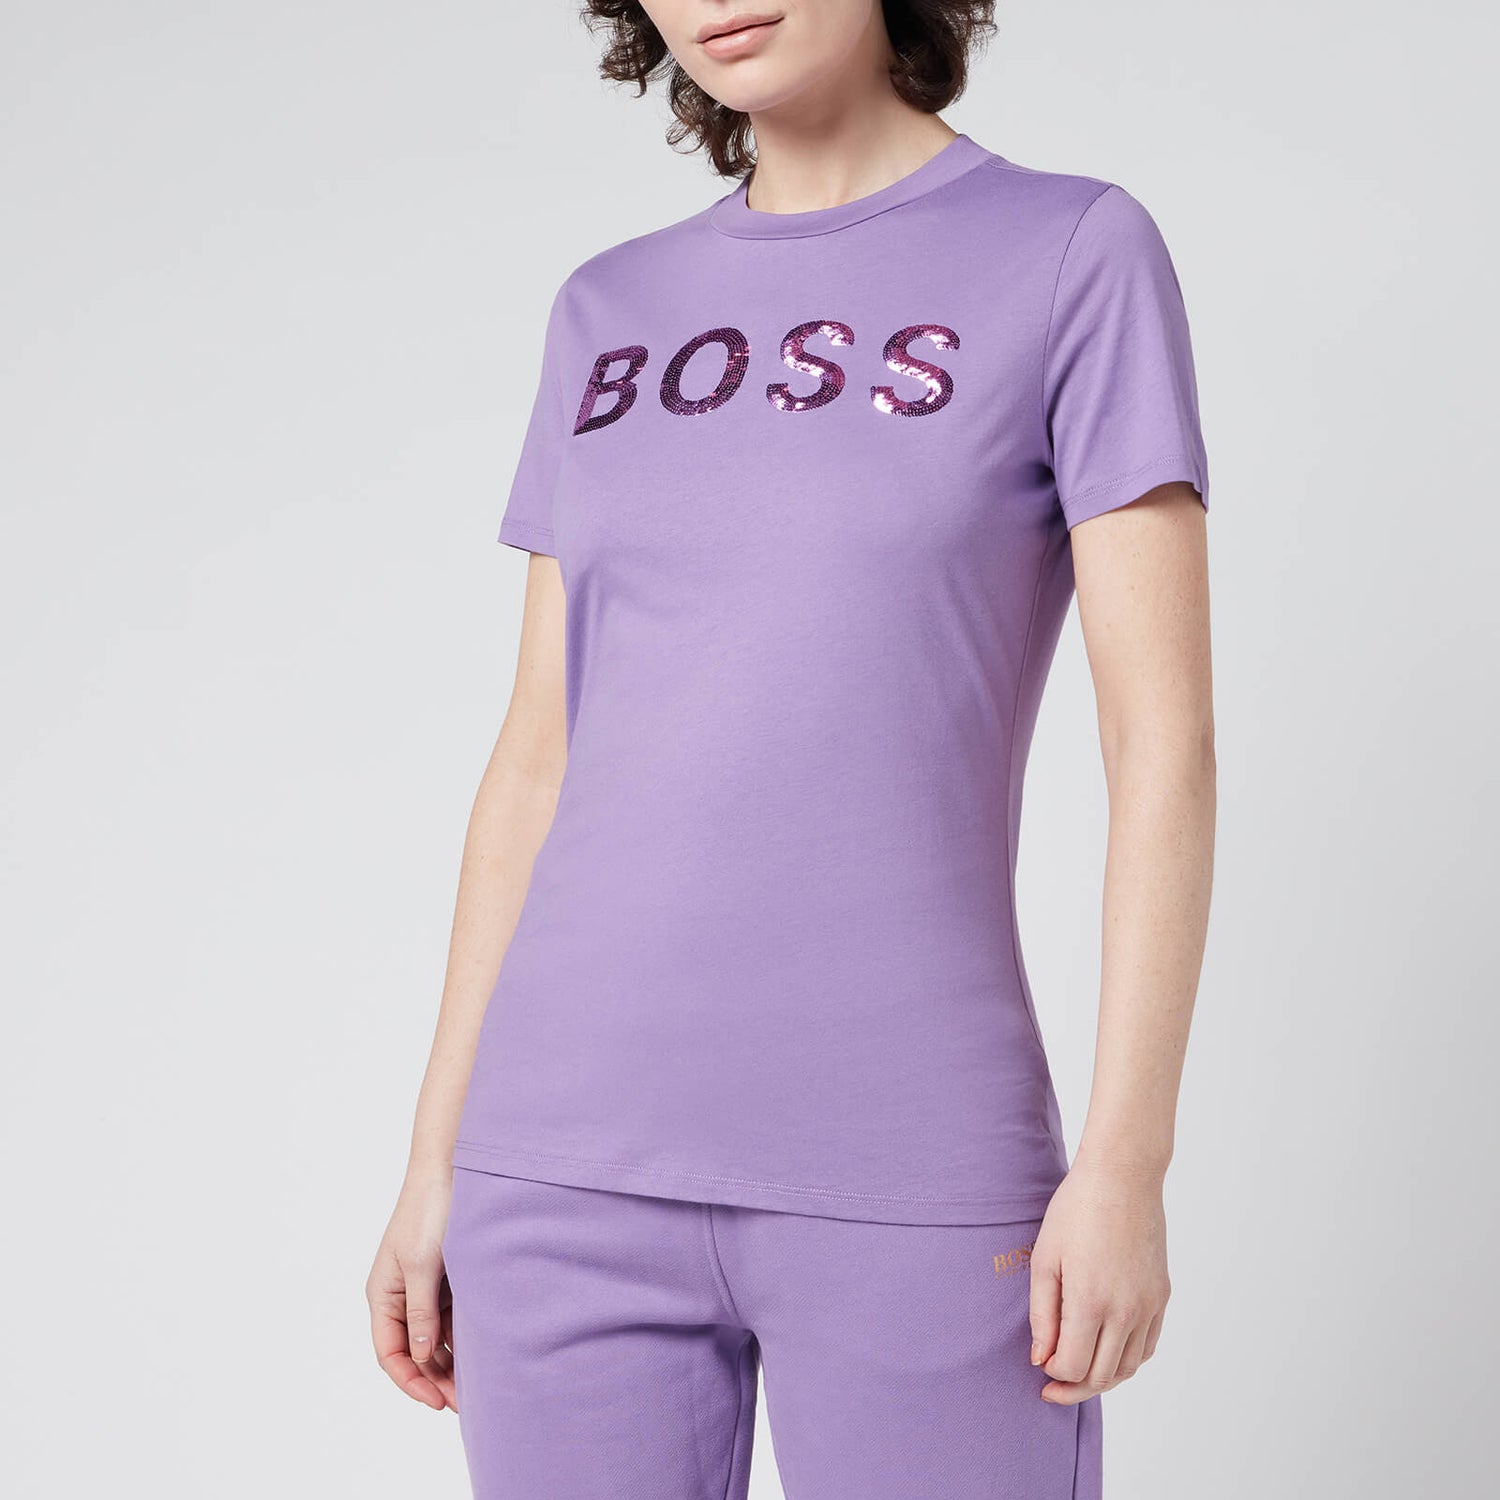 BOSS Women's Elogo_4 T-Shirt - Open Purple